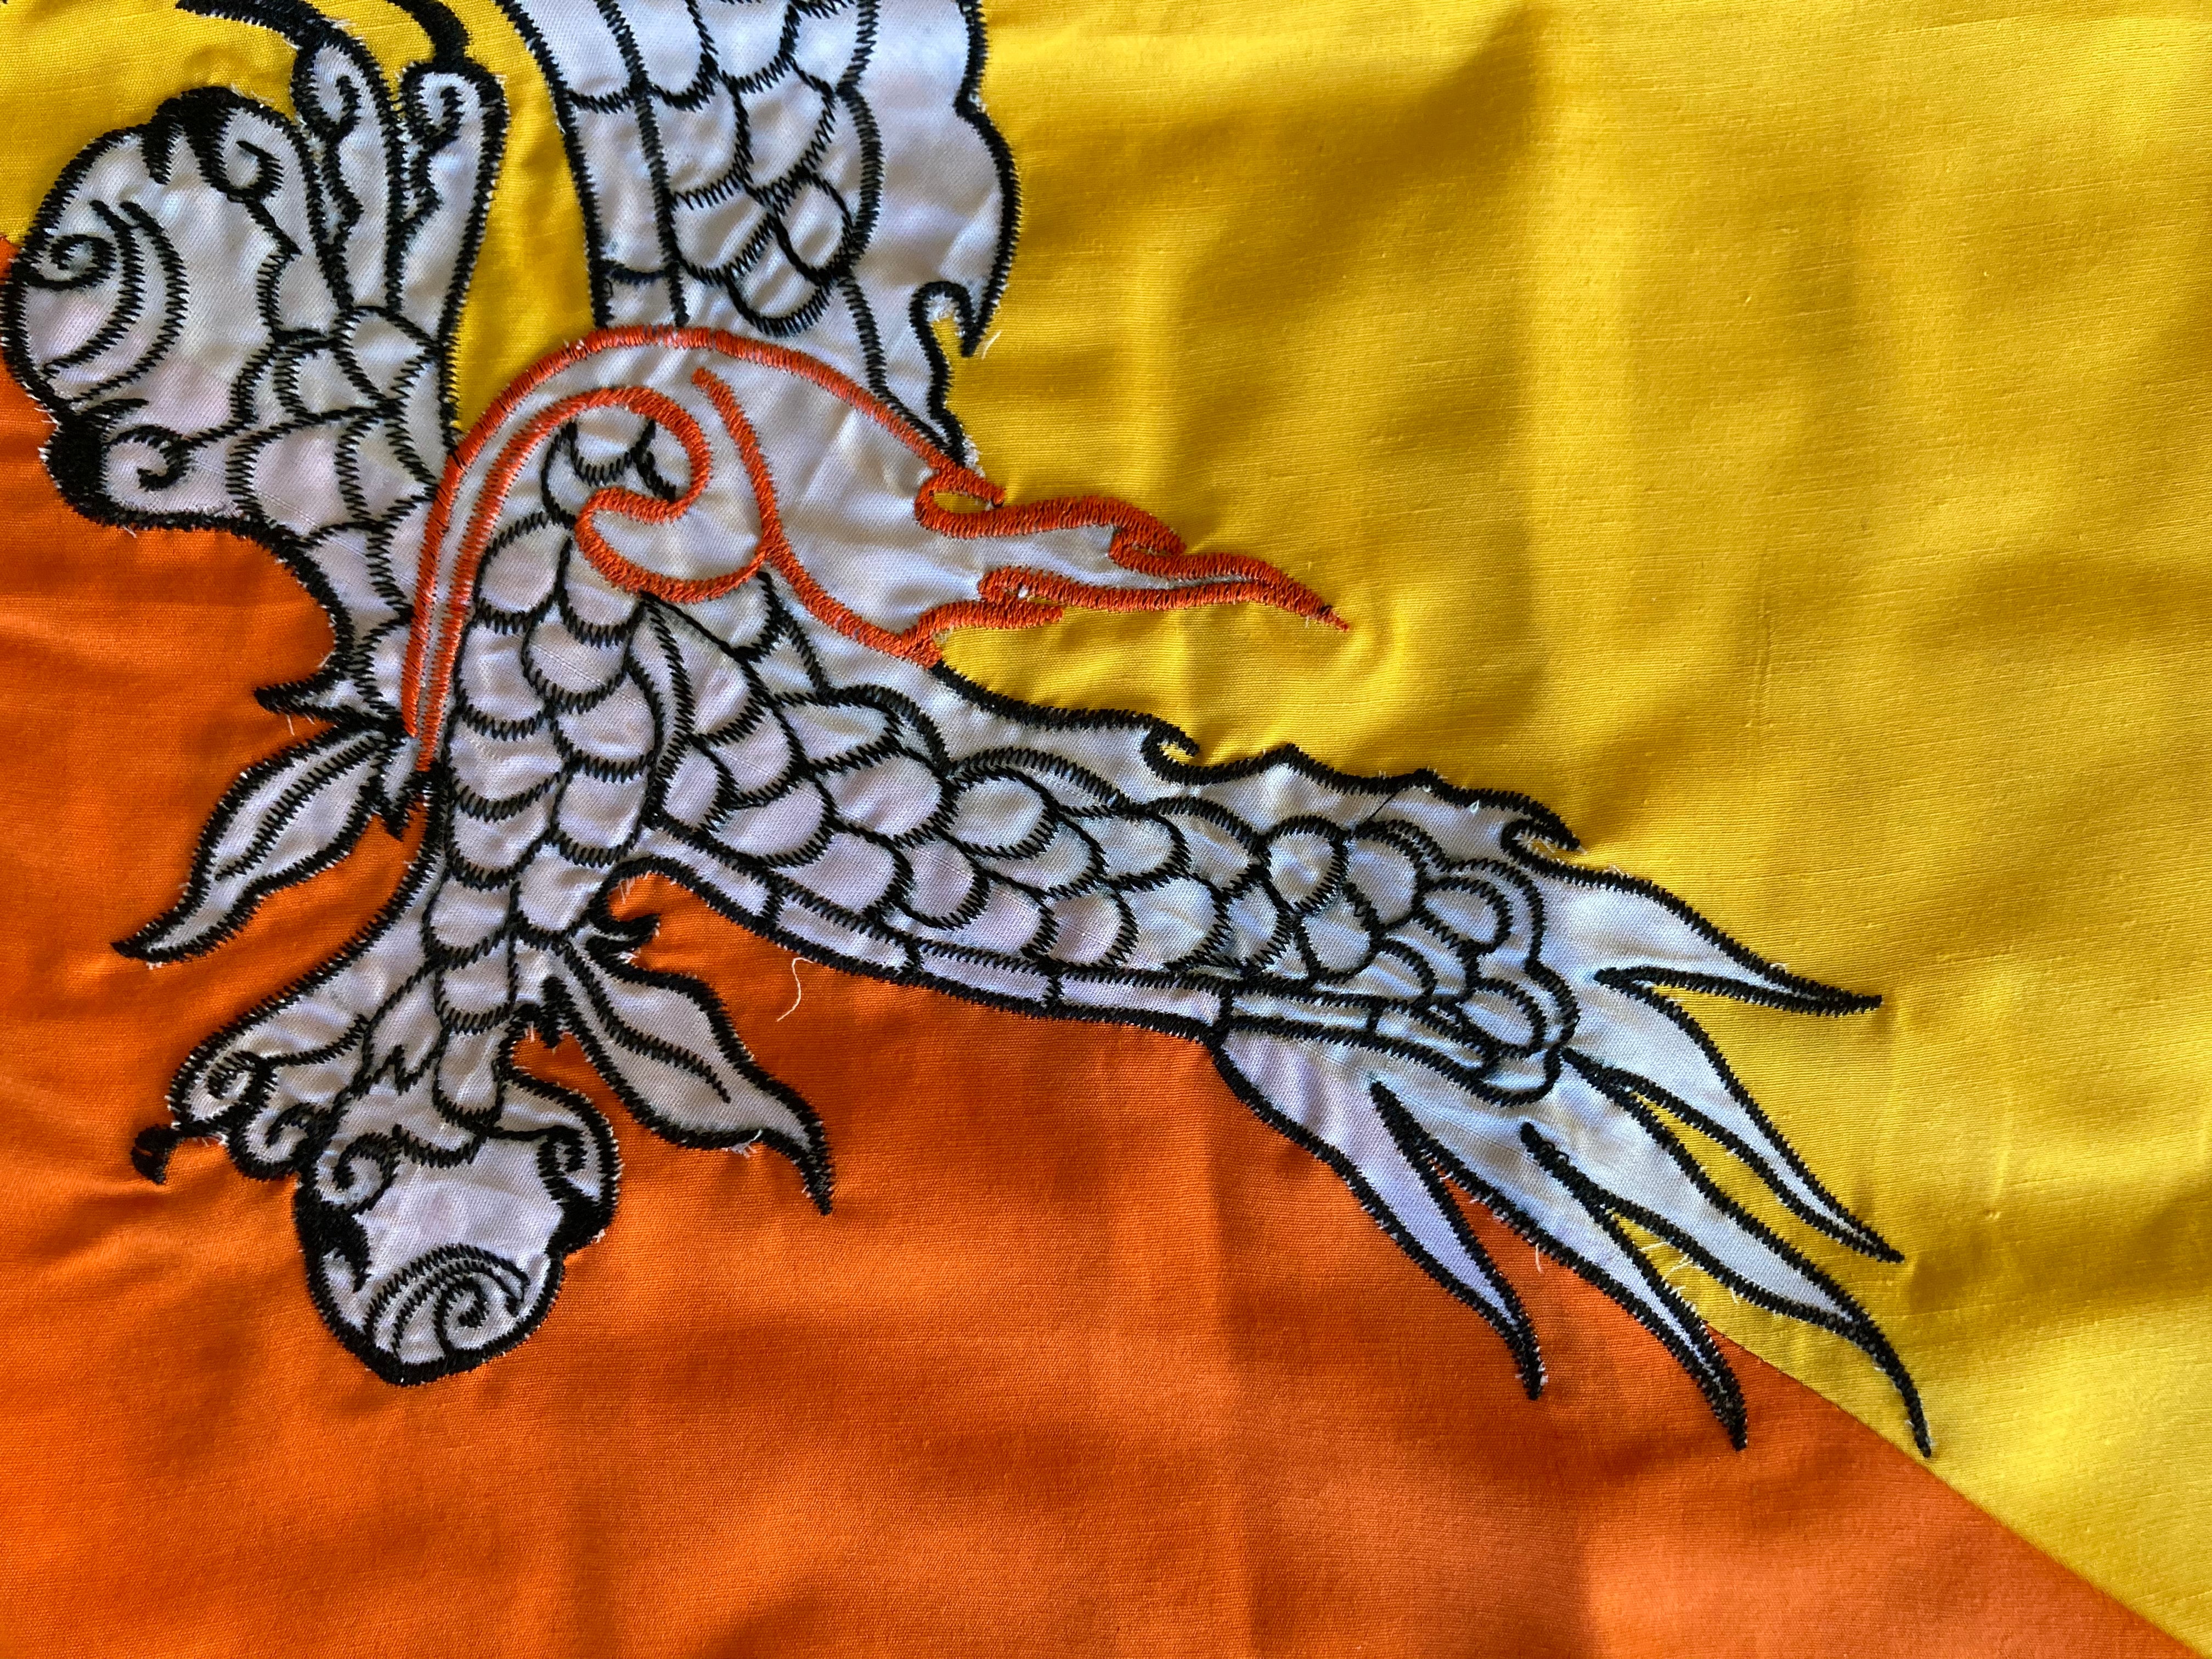 The National Flag of Bhutan - handmade with embroidered dragon